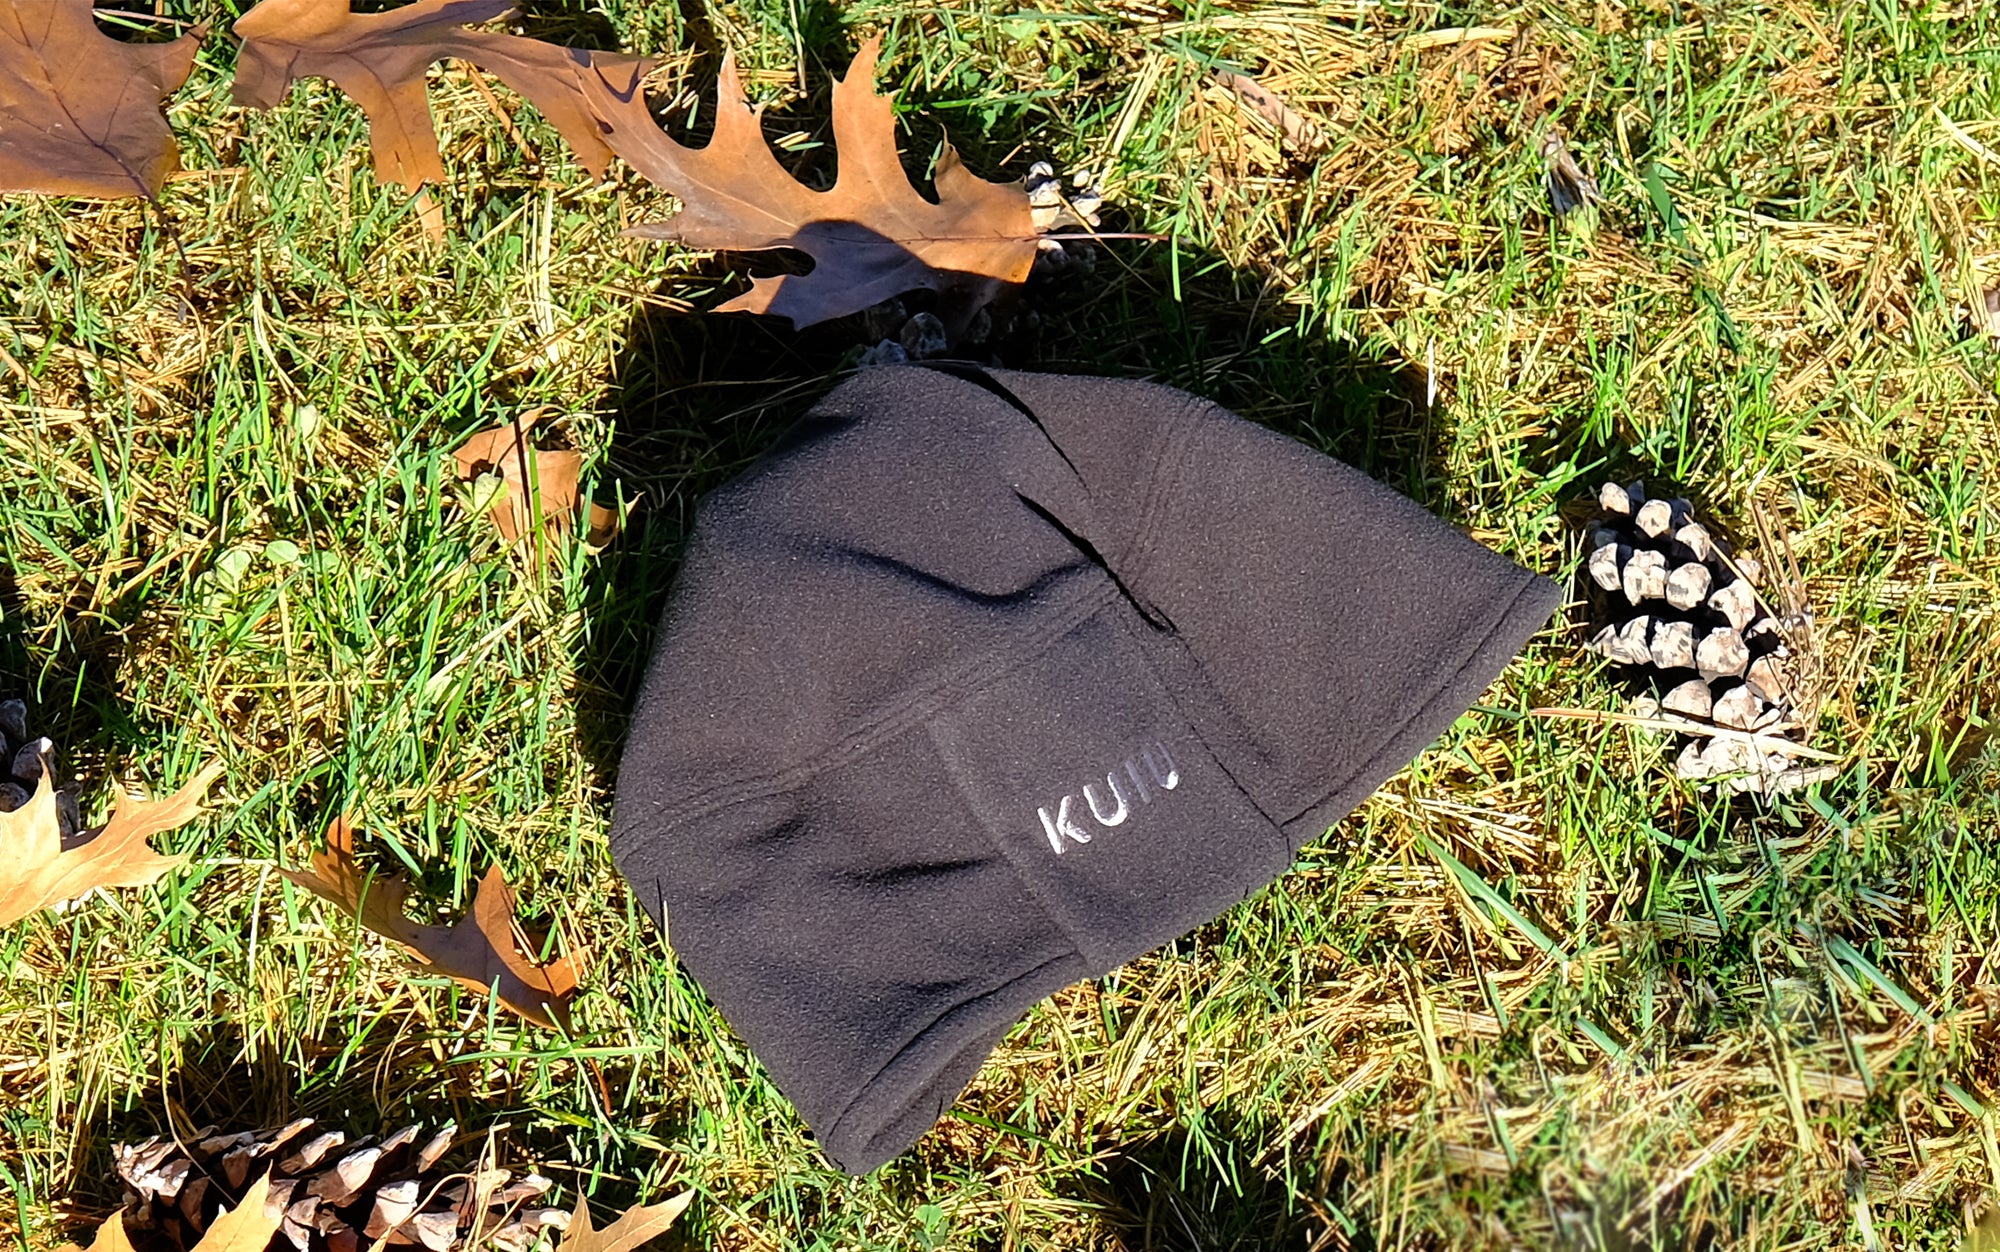 We tested the Kuiu Wind Pro Fleece Beanie.